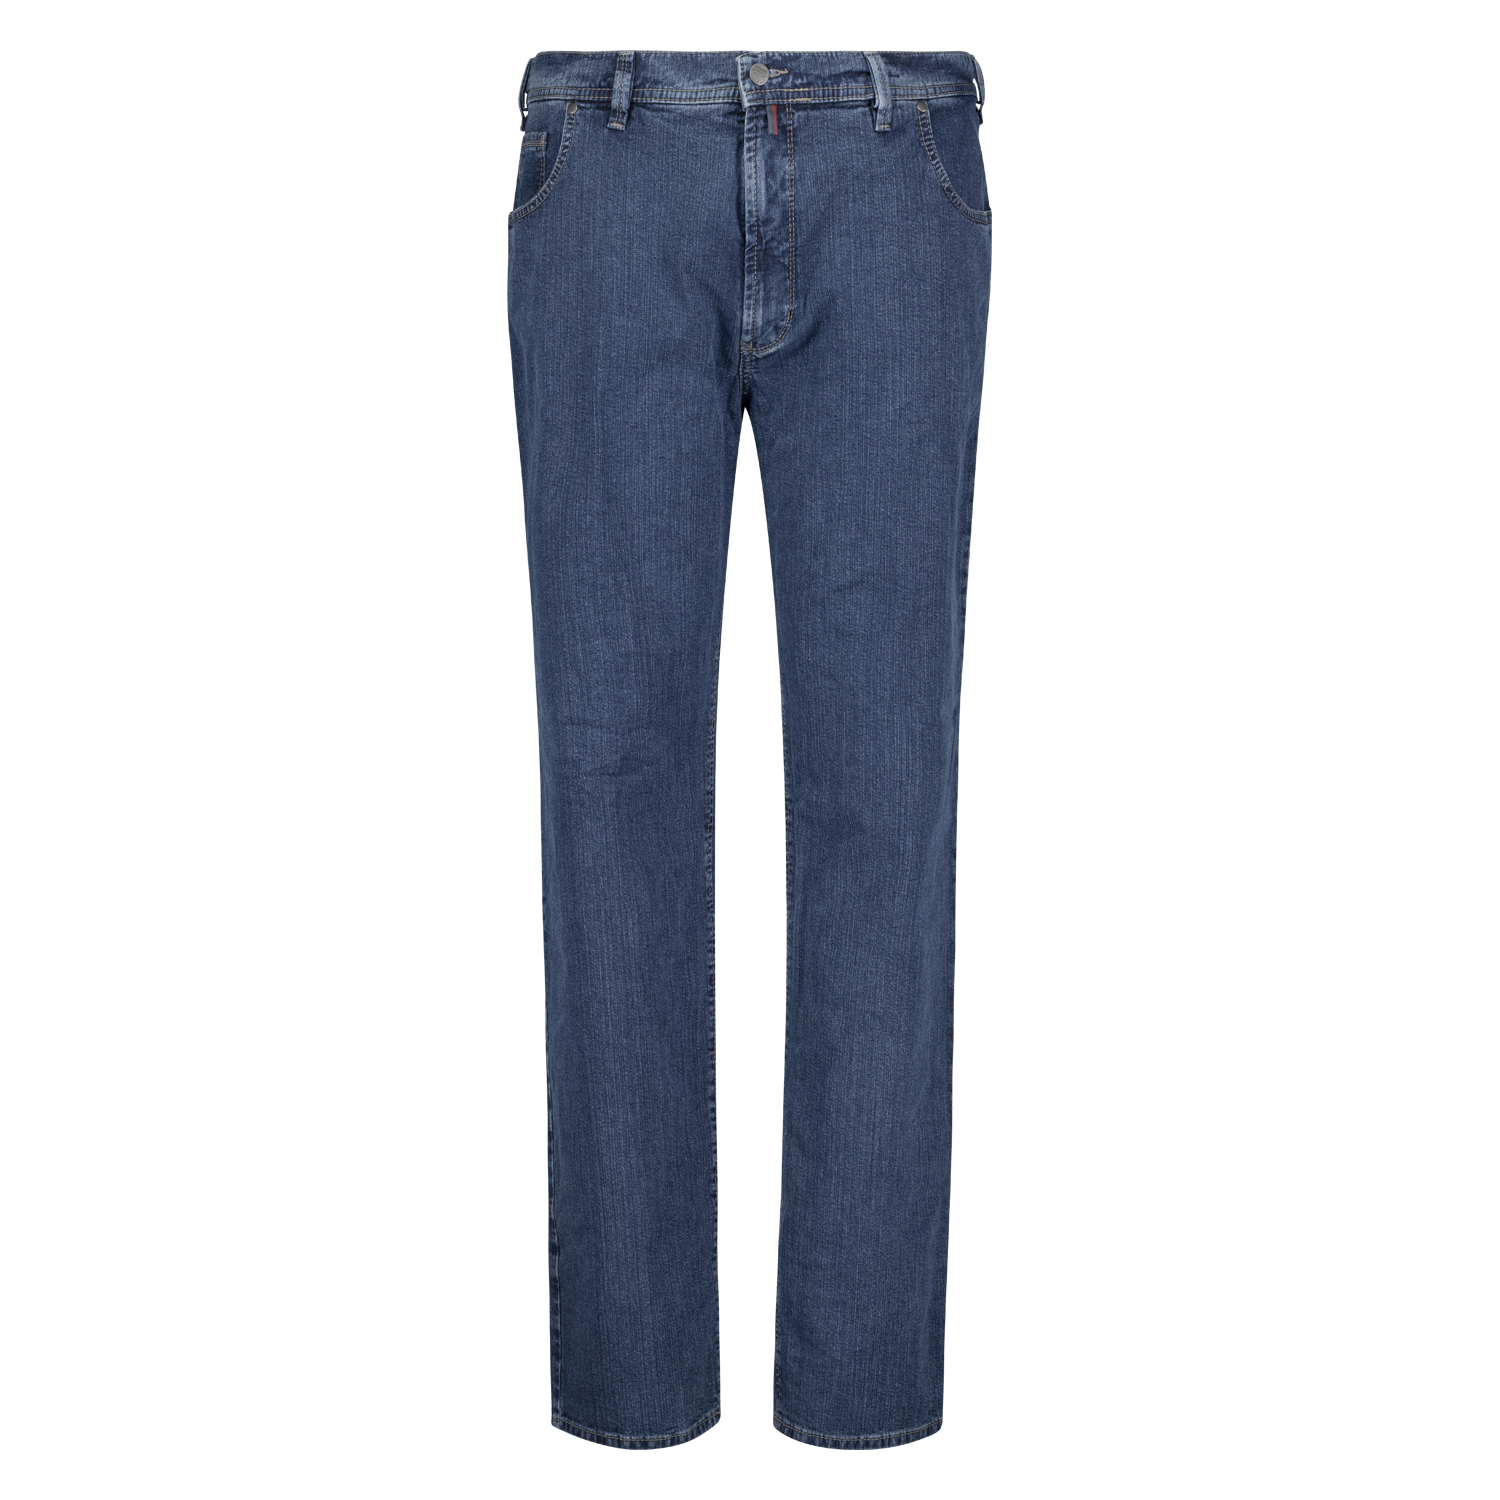 Five pocket jeans model "Peter" by Pioneer in oversize blue stonewash (regular rise): 56 - 74